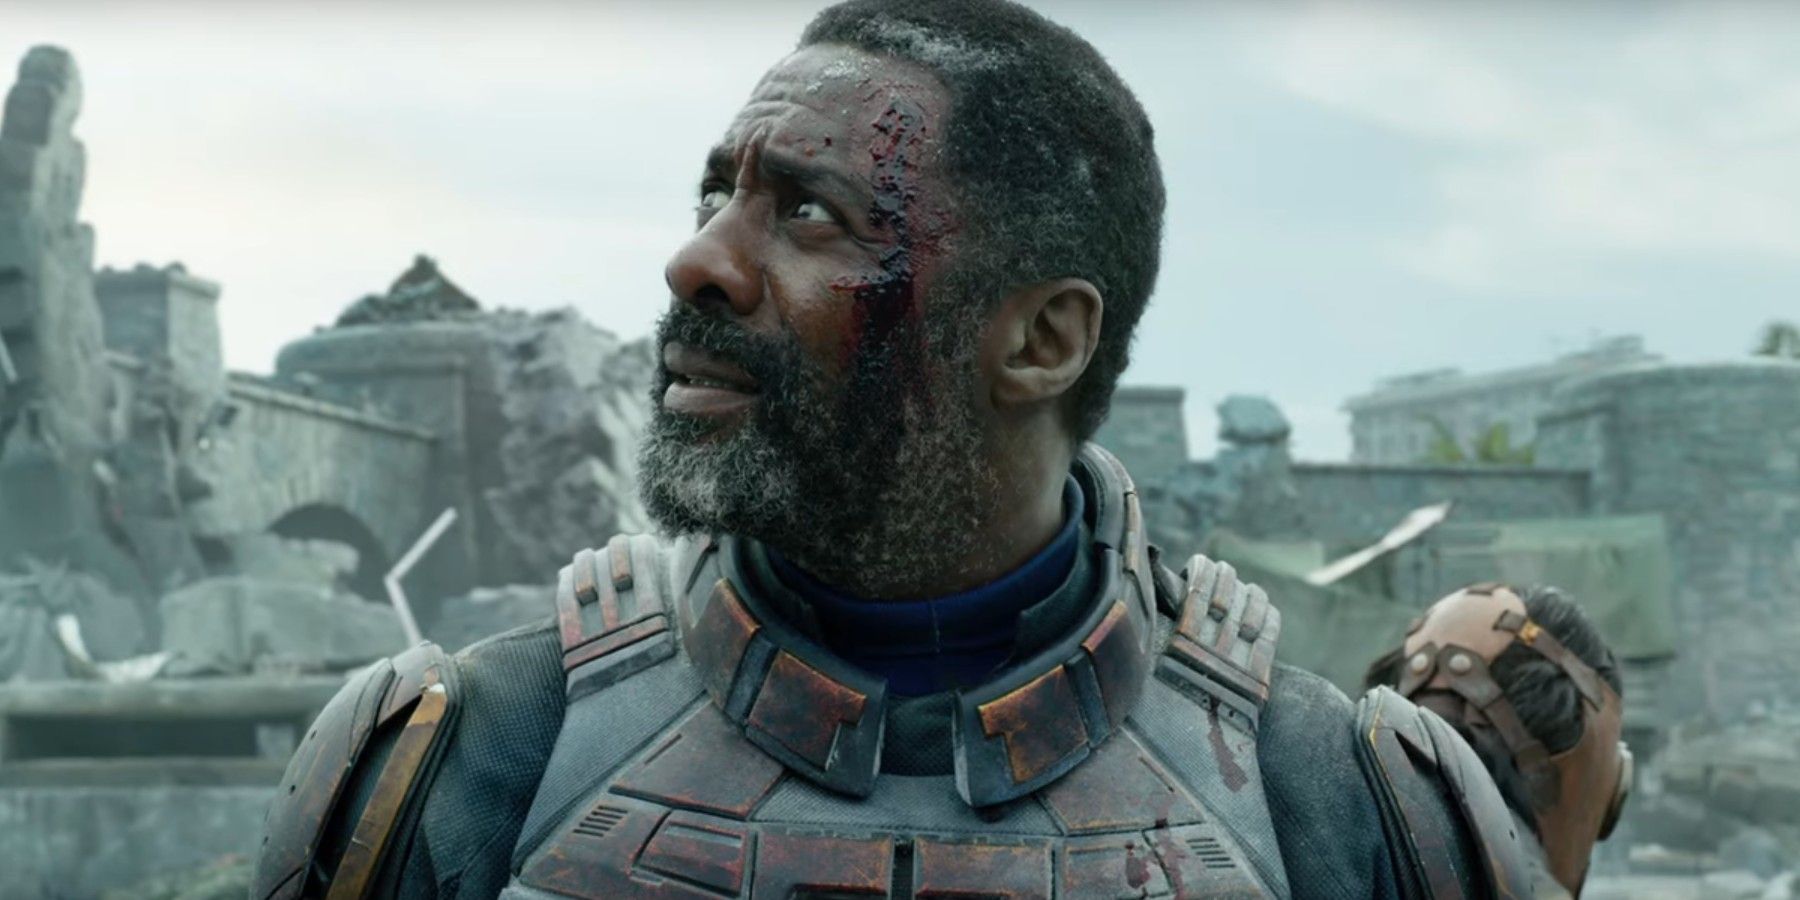 Idris Elba as Bloodsport in Suicide Squad